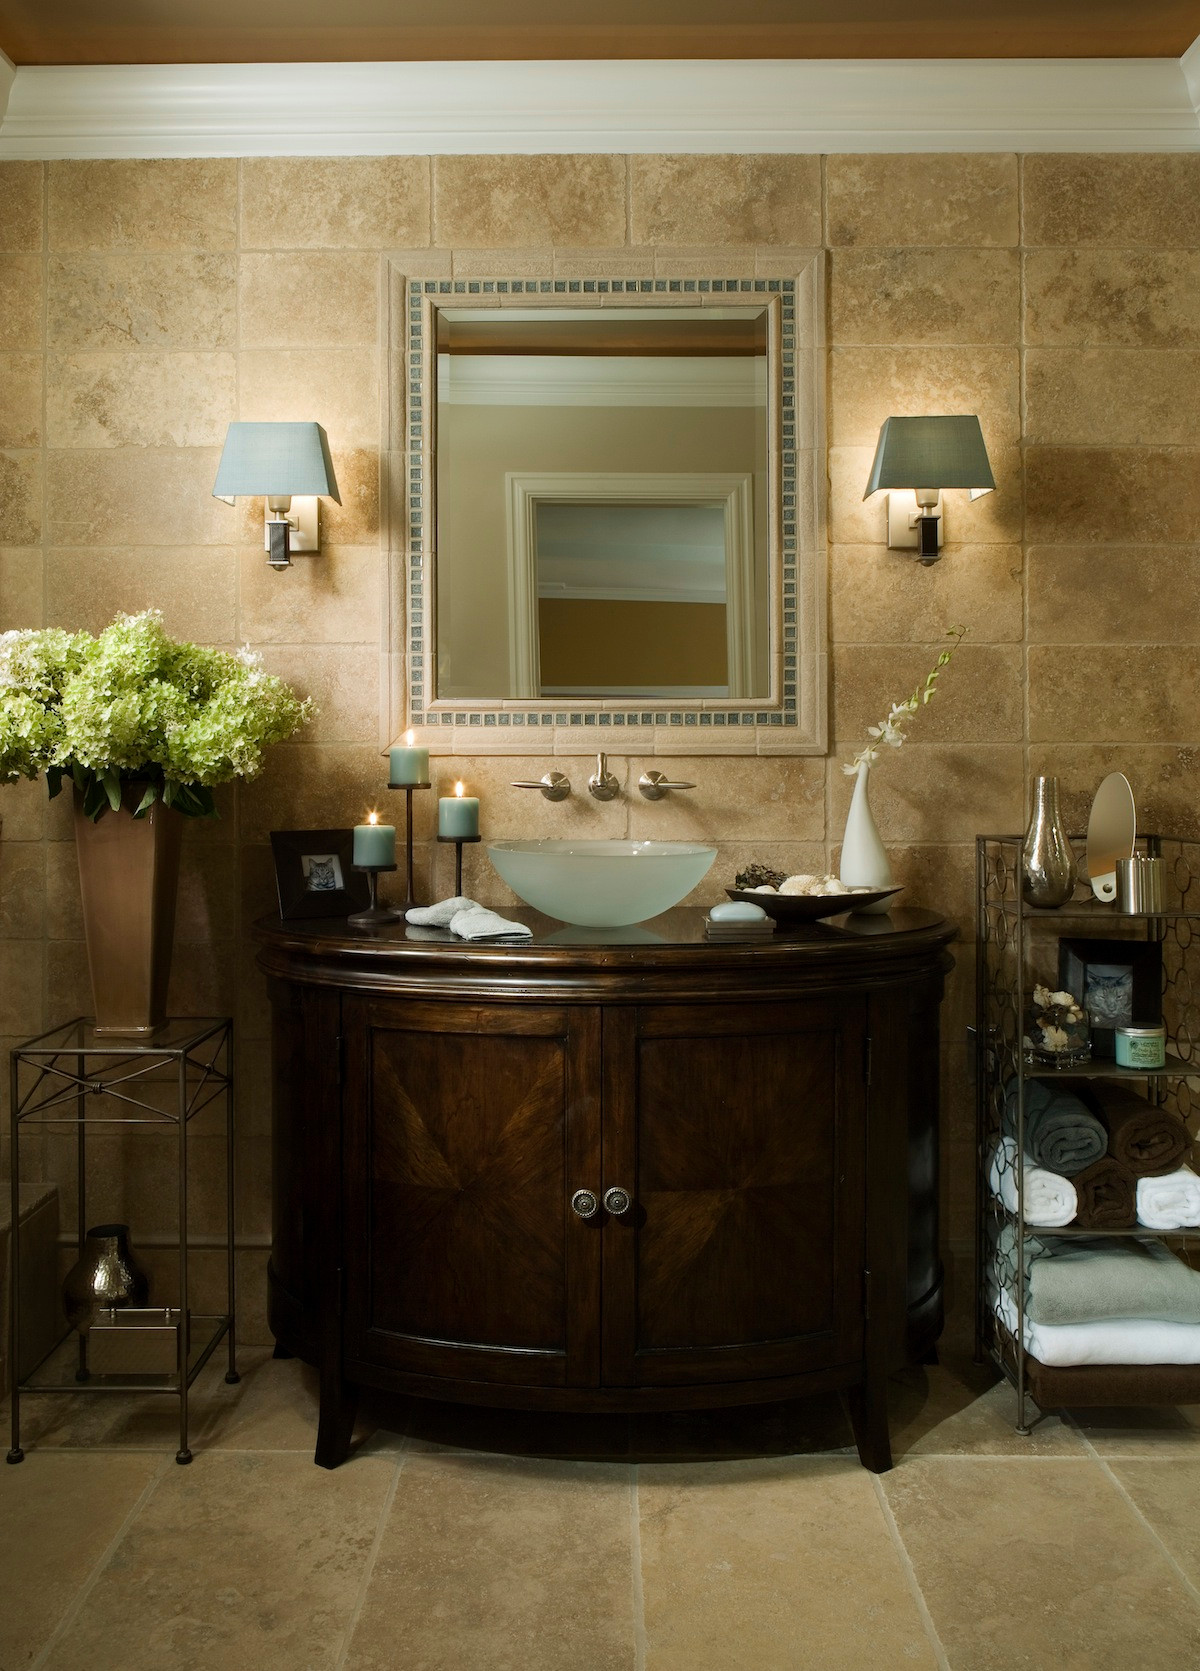 Demilune Vanity Houzz, Demilune Bathroom Vanity Cabinet